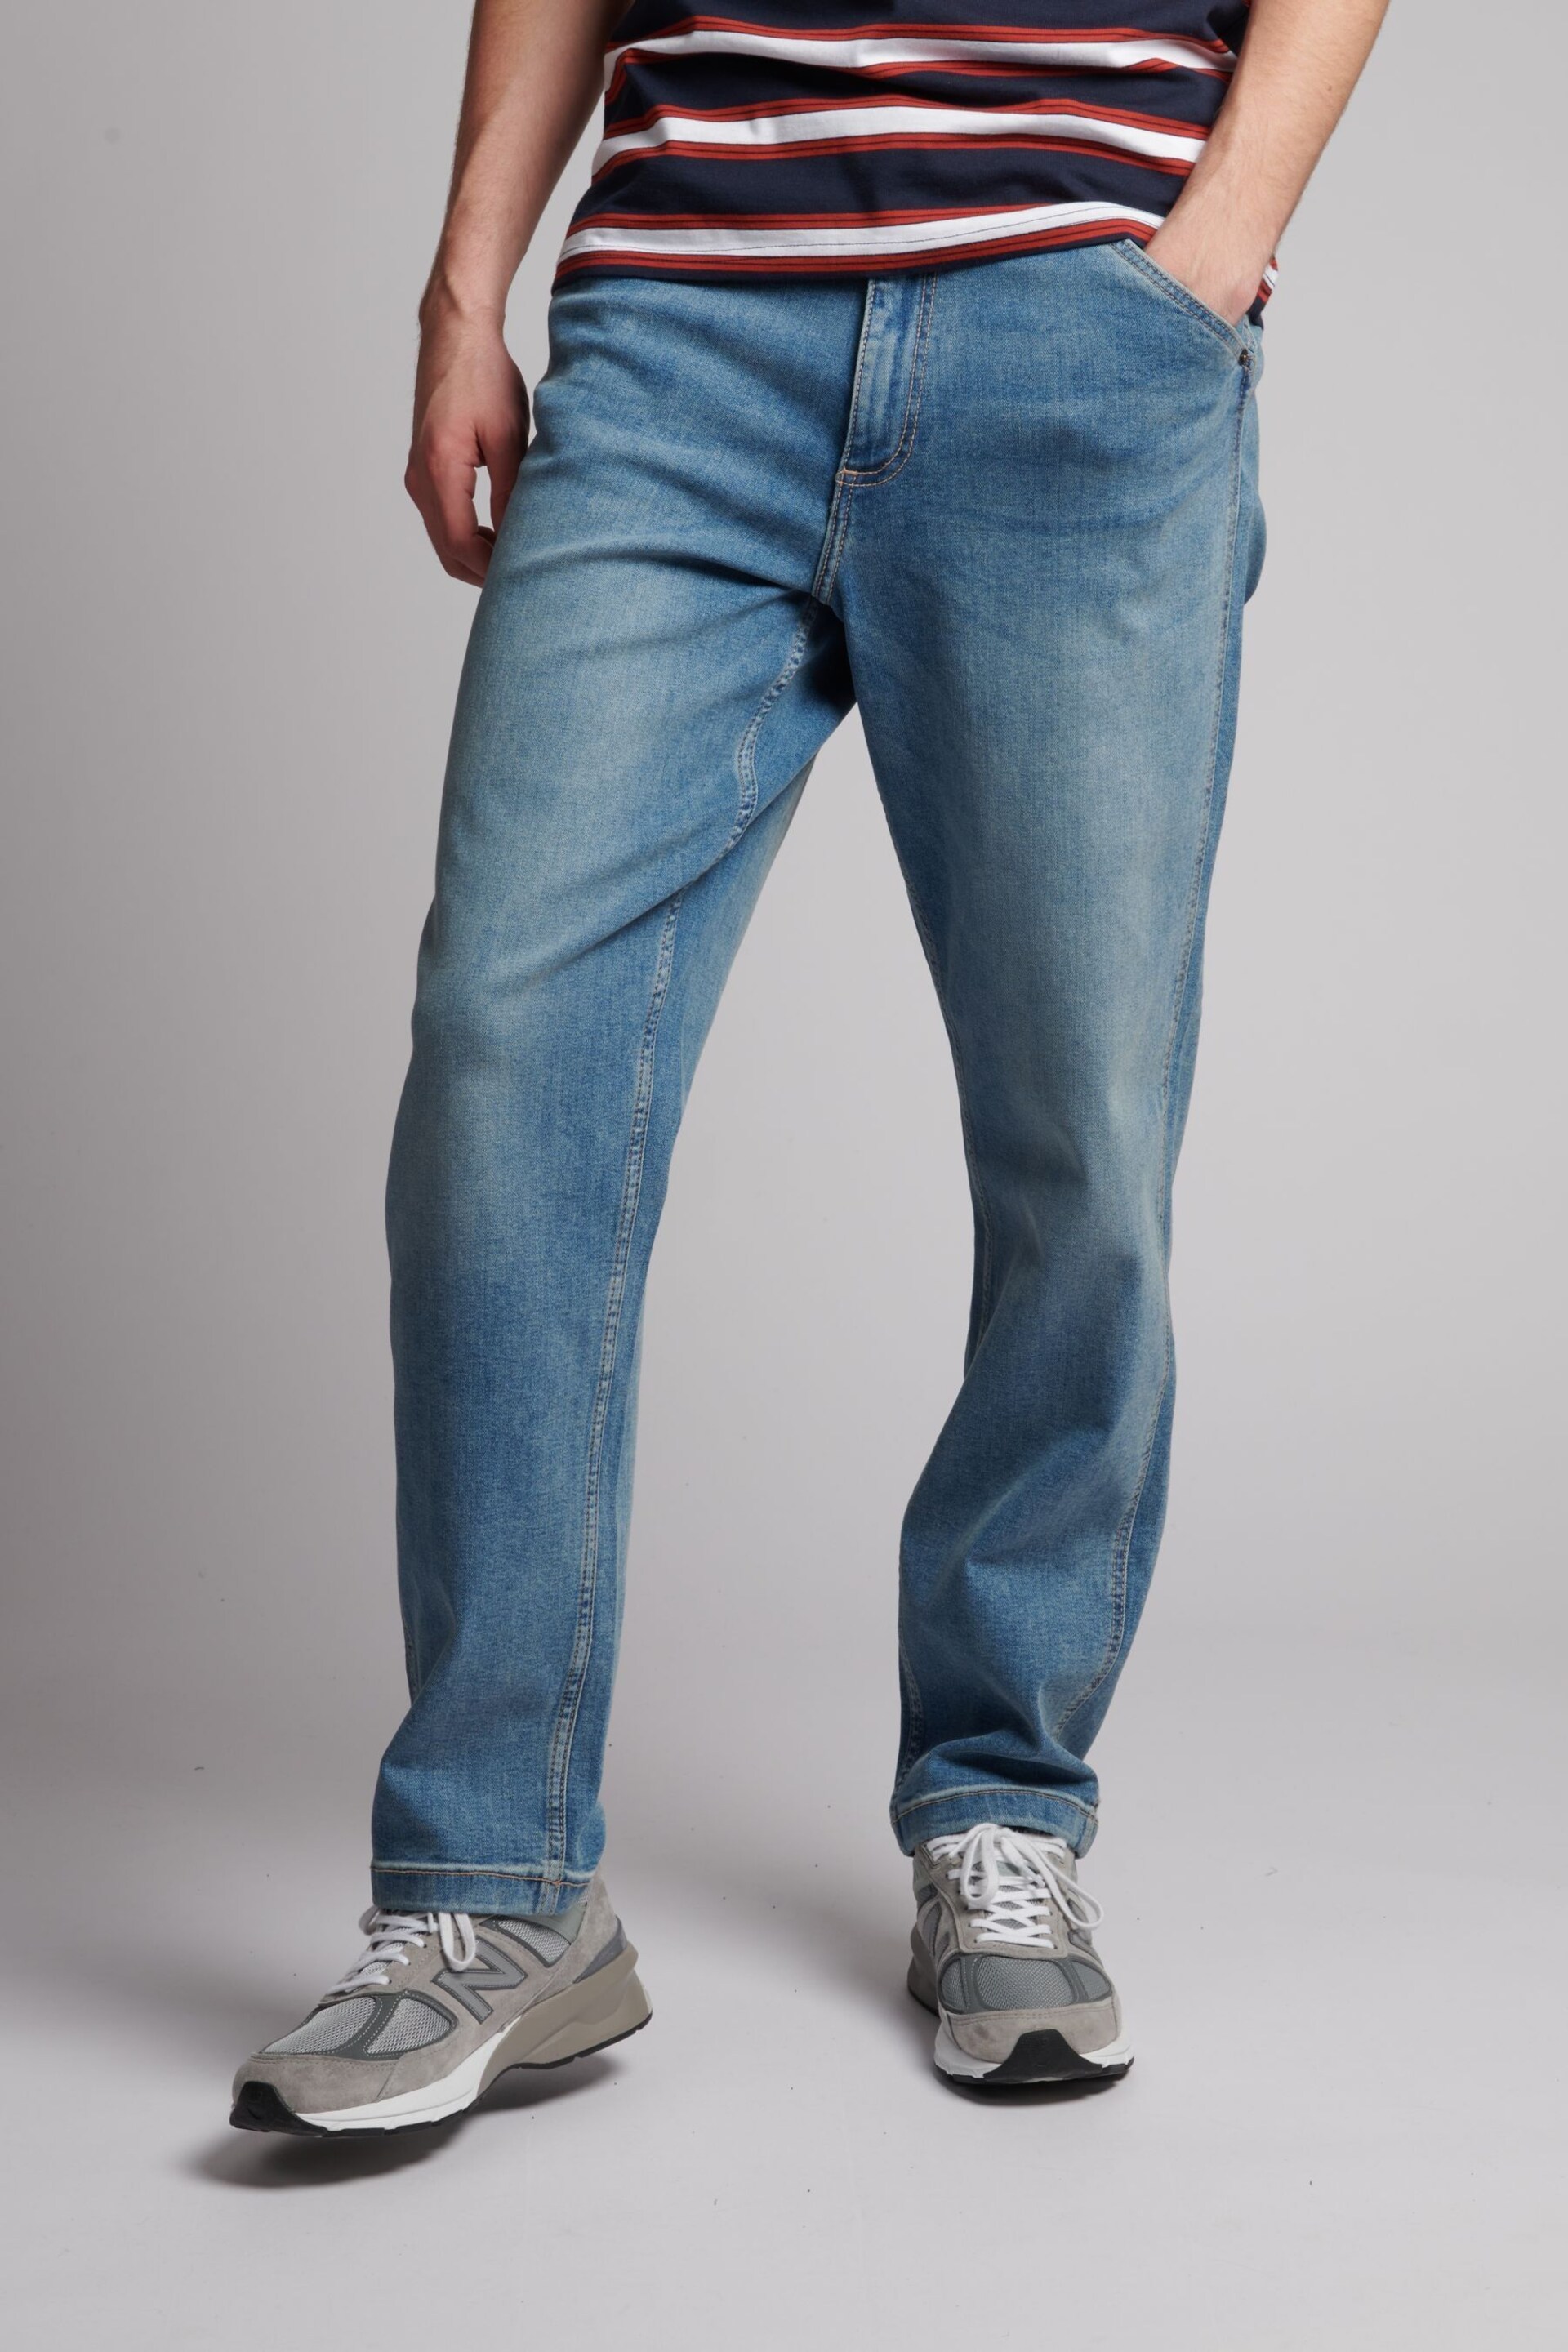 U.S. Polo Assn. Men's Blue Five Pocket Denim Loose Jeans - Image 1 of 4